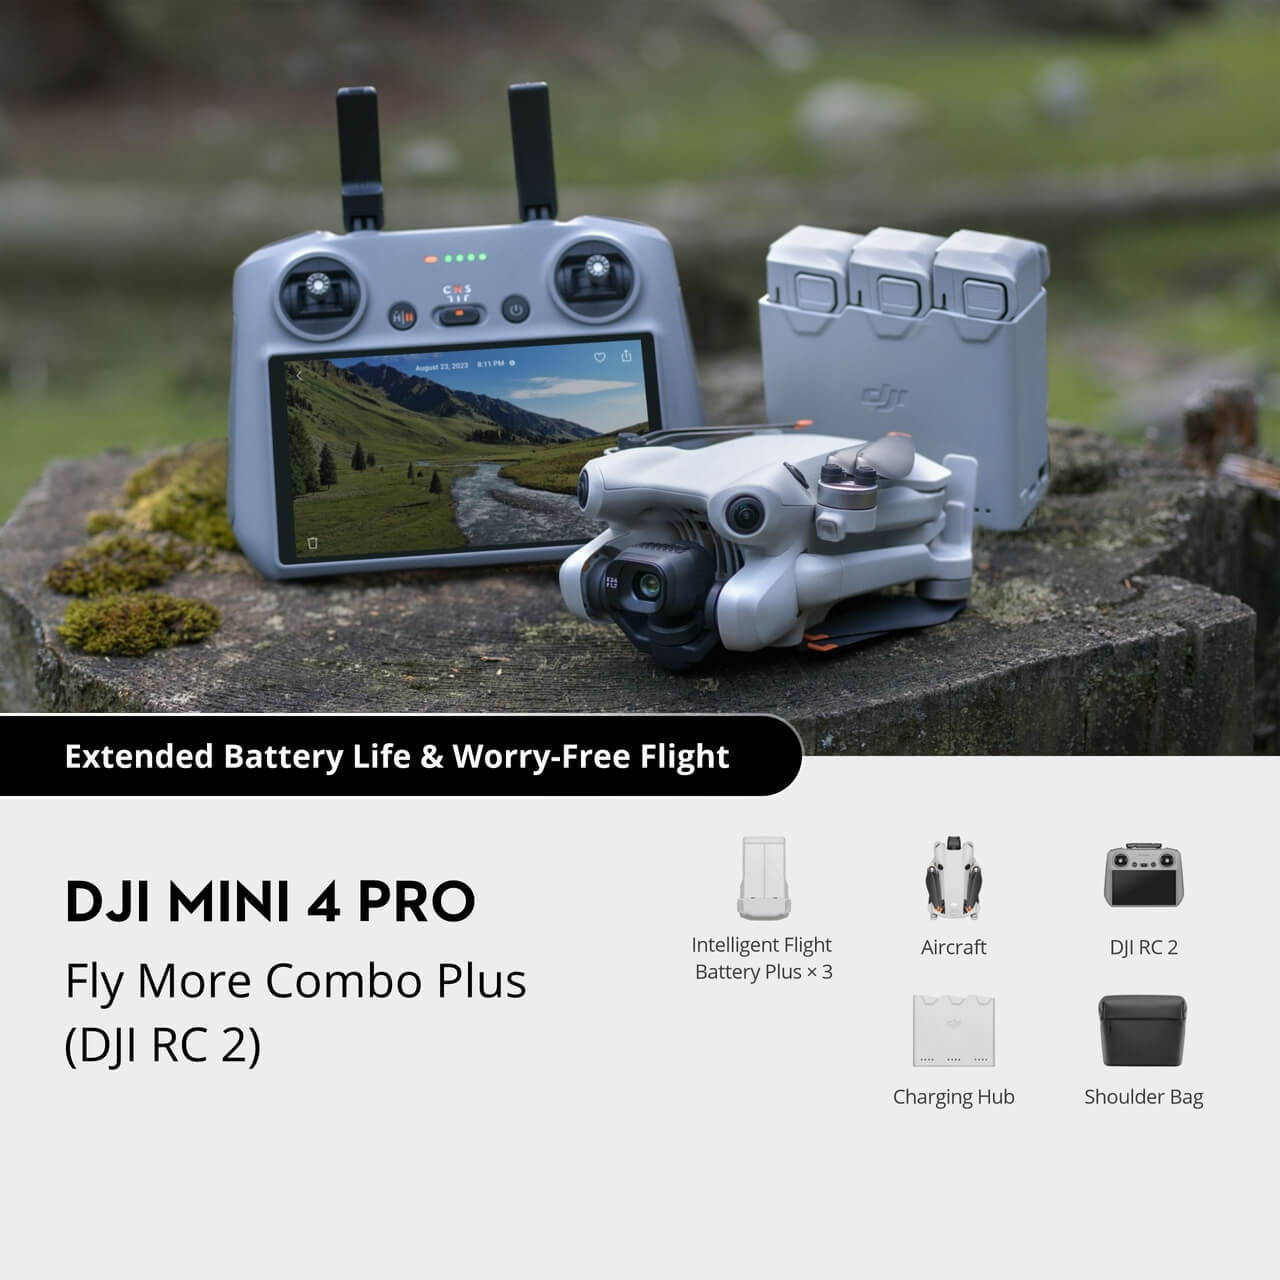 DJI Mini 3 Pro (DJI RC) (GL)